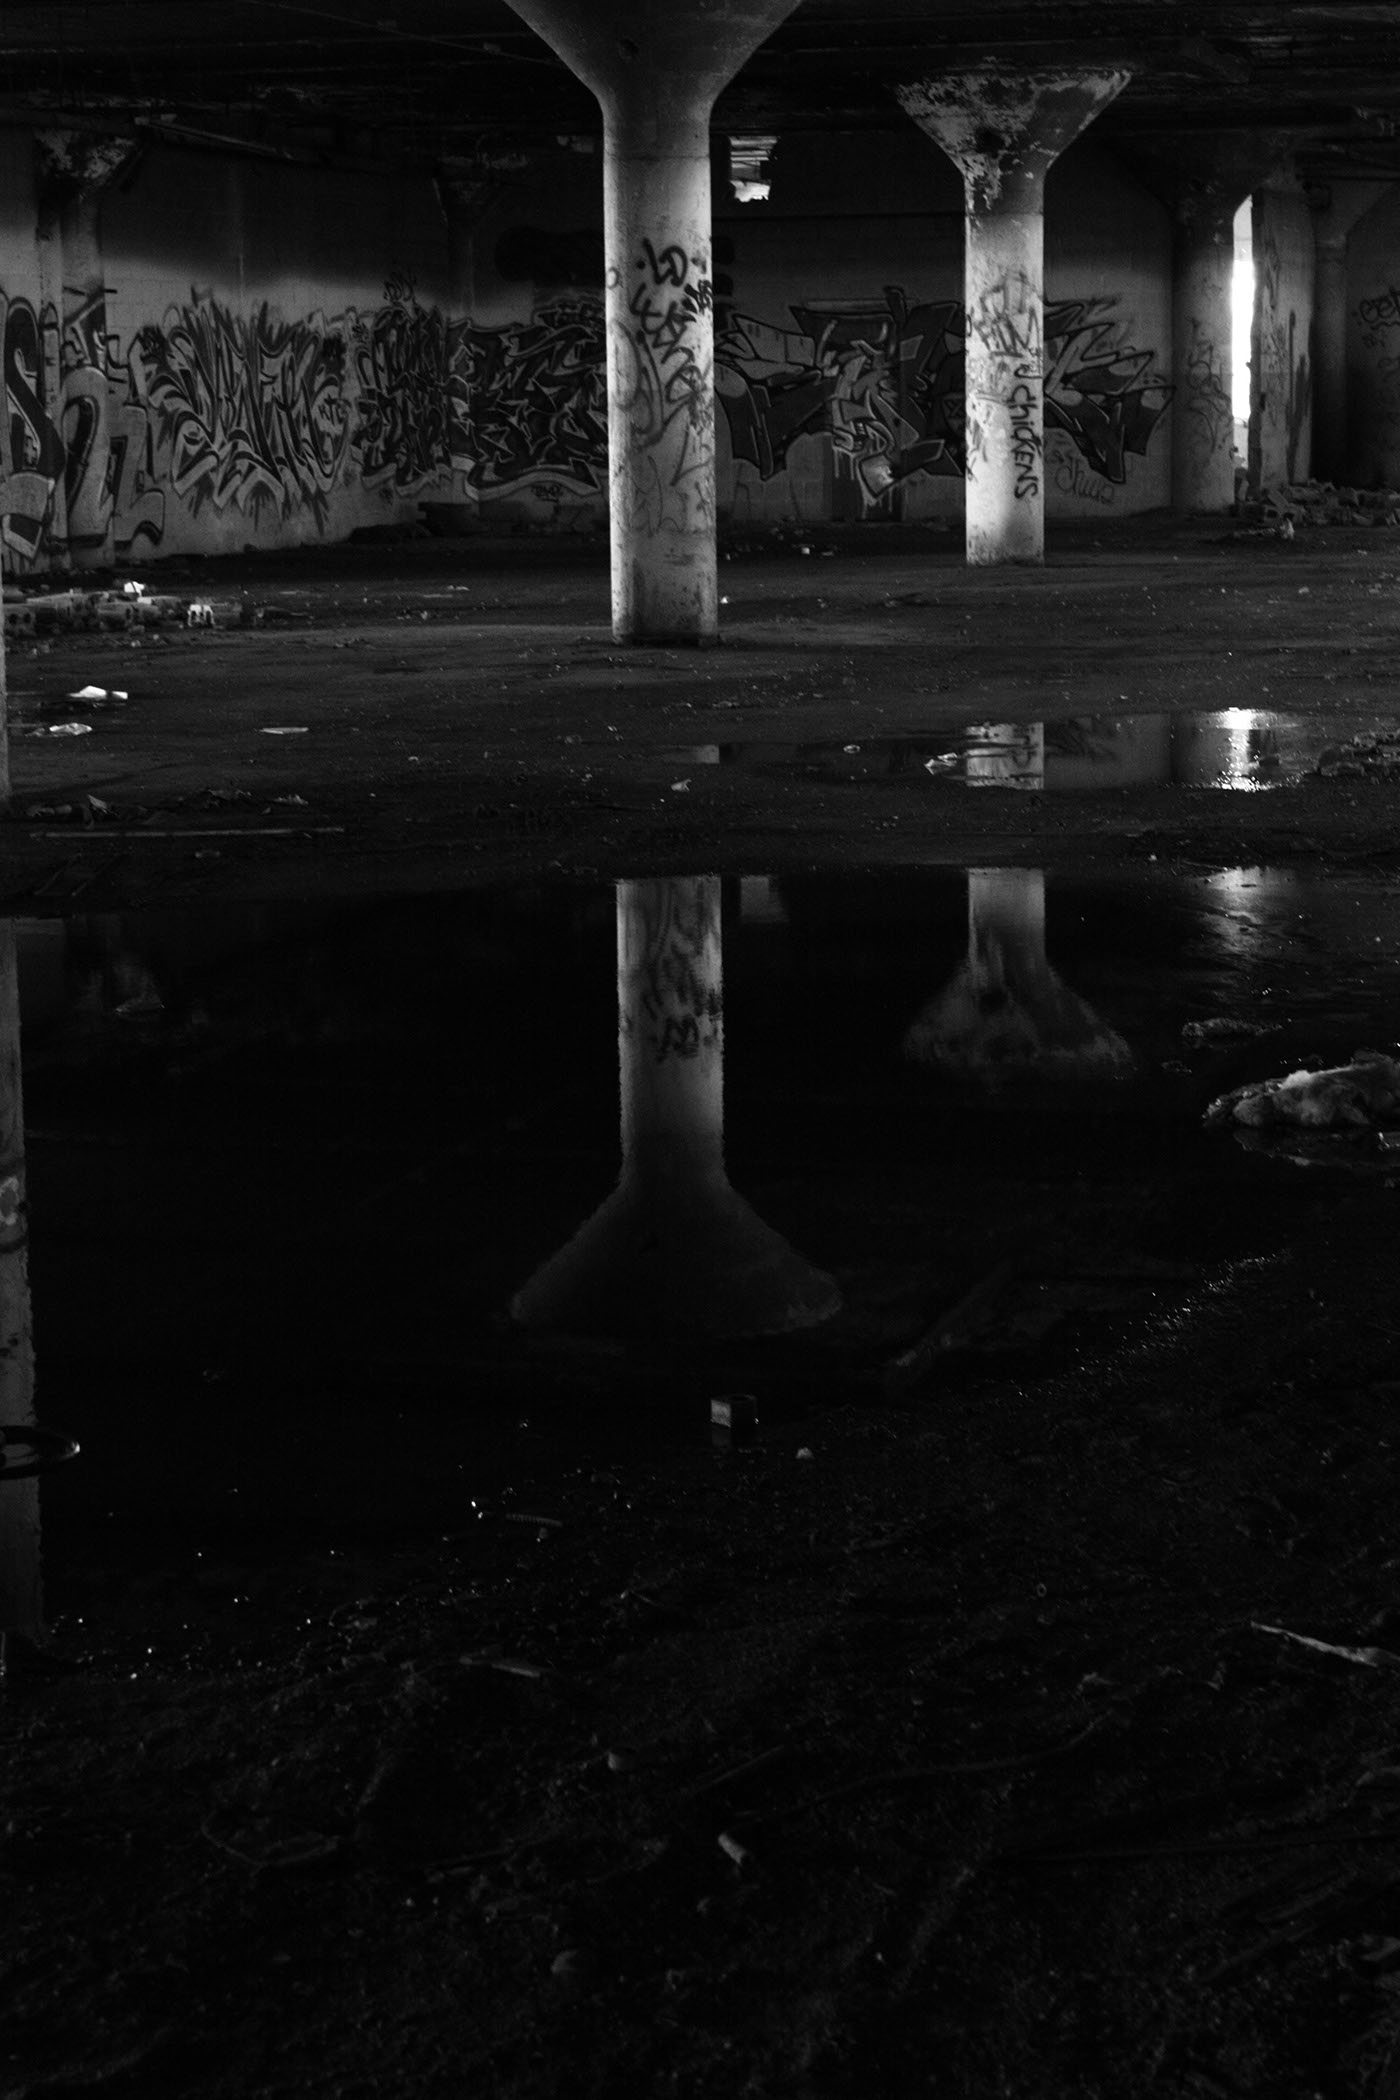 black & white abandon detroit Michigan broken trash Michigan Grand Central Station The Packard Graffiti tags light essence grit dirt hope sad building Beaten ugly texture steel wood illegal